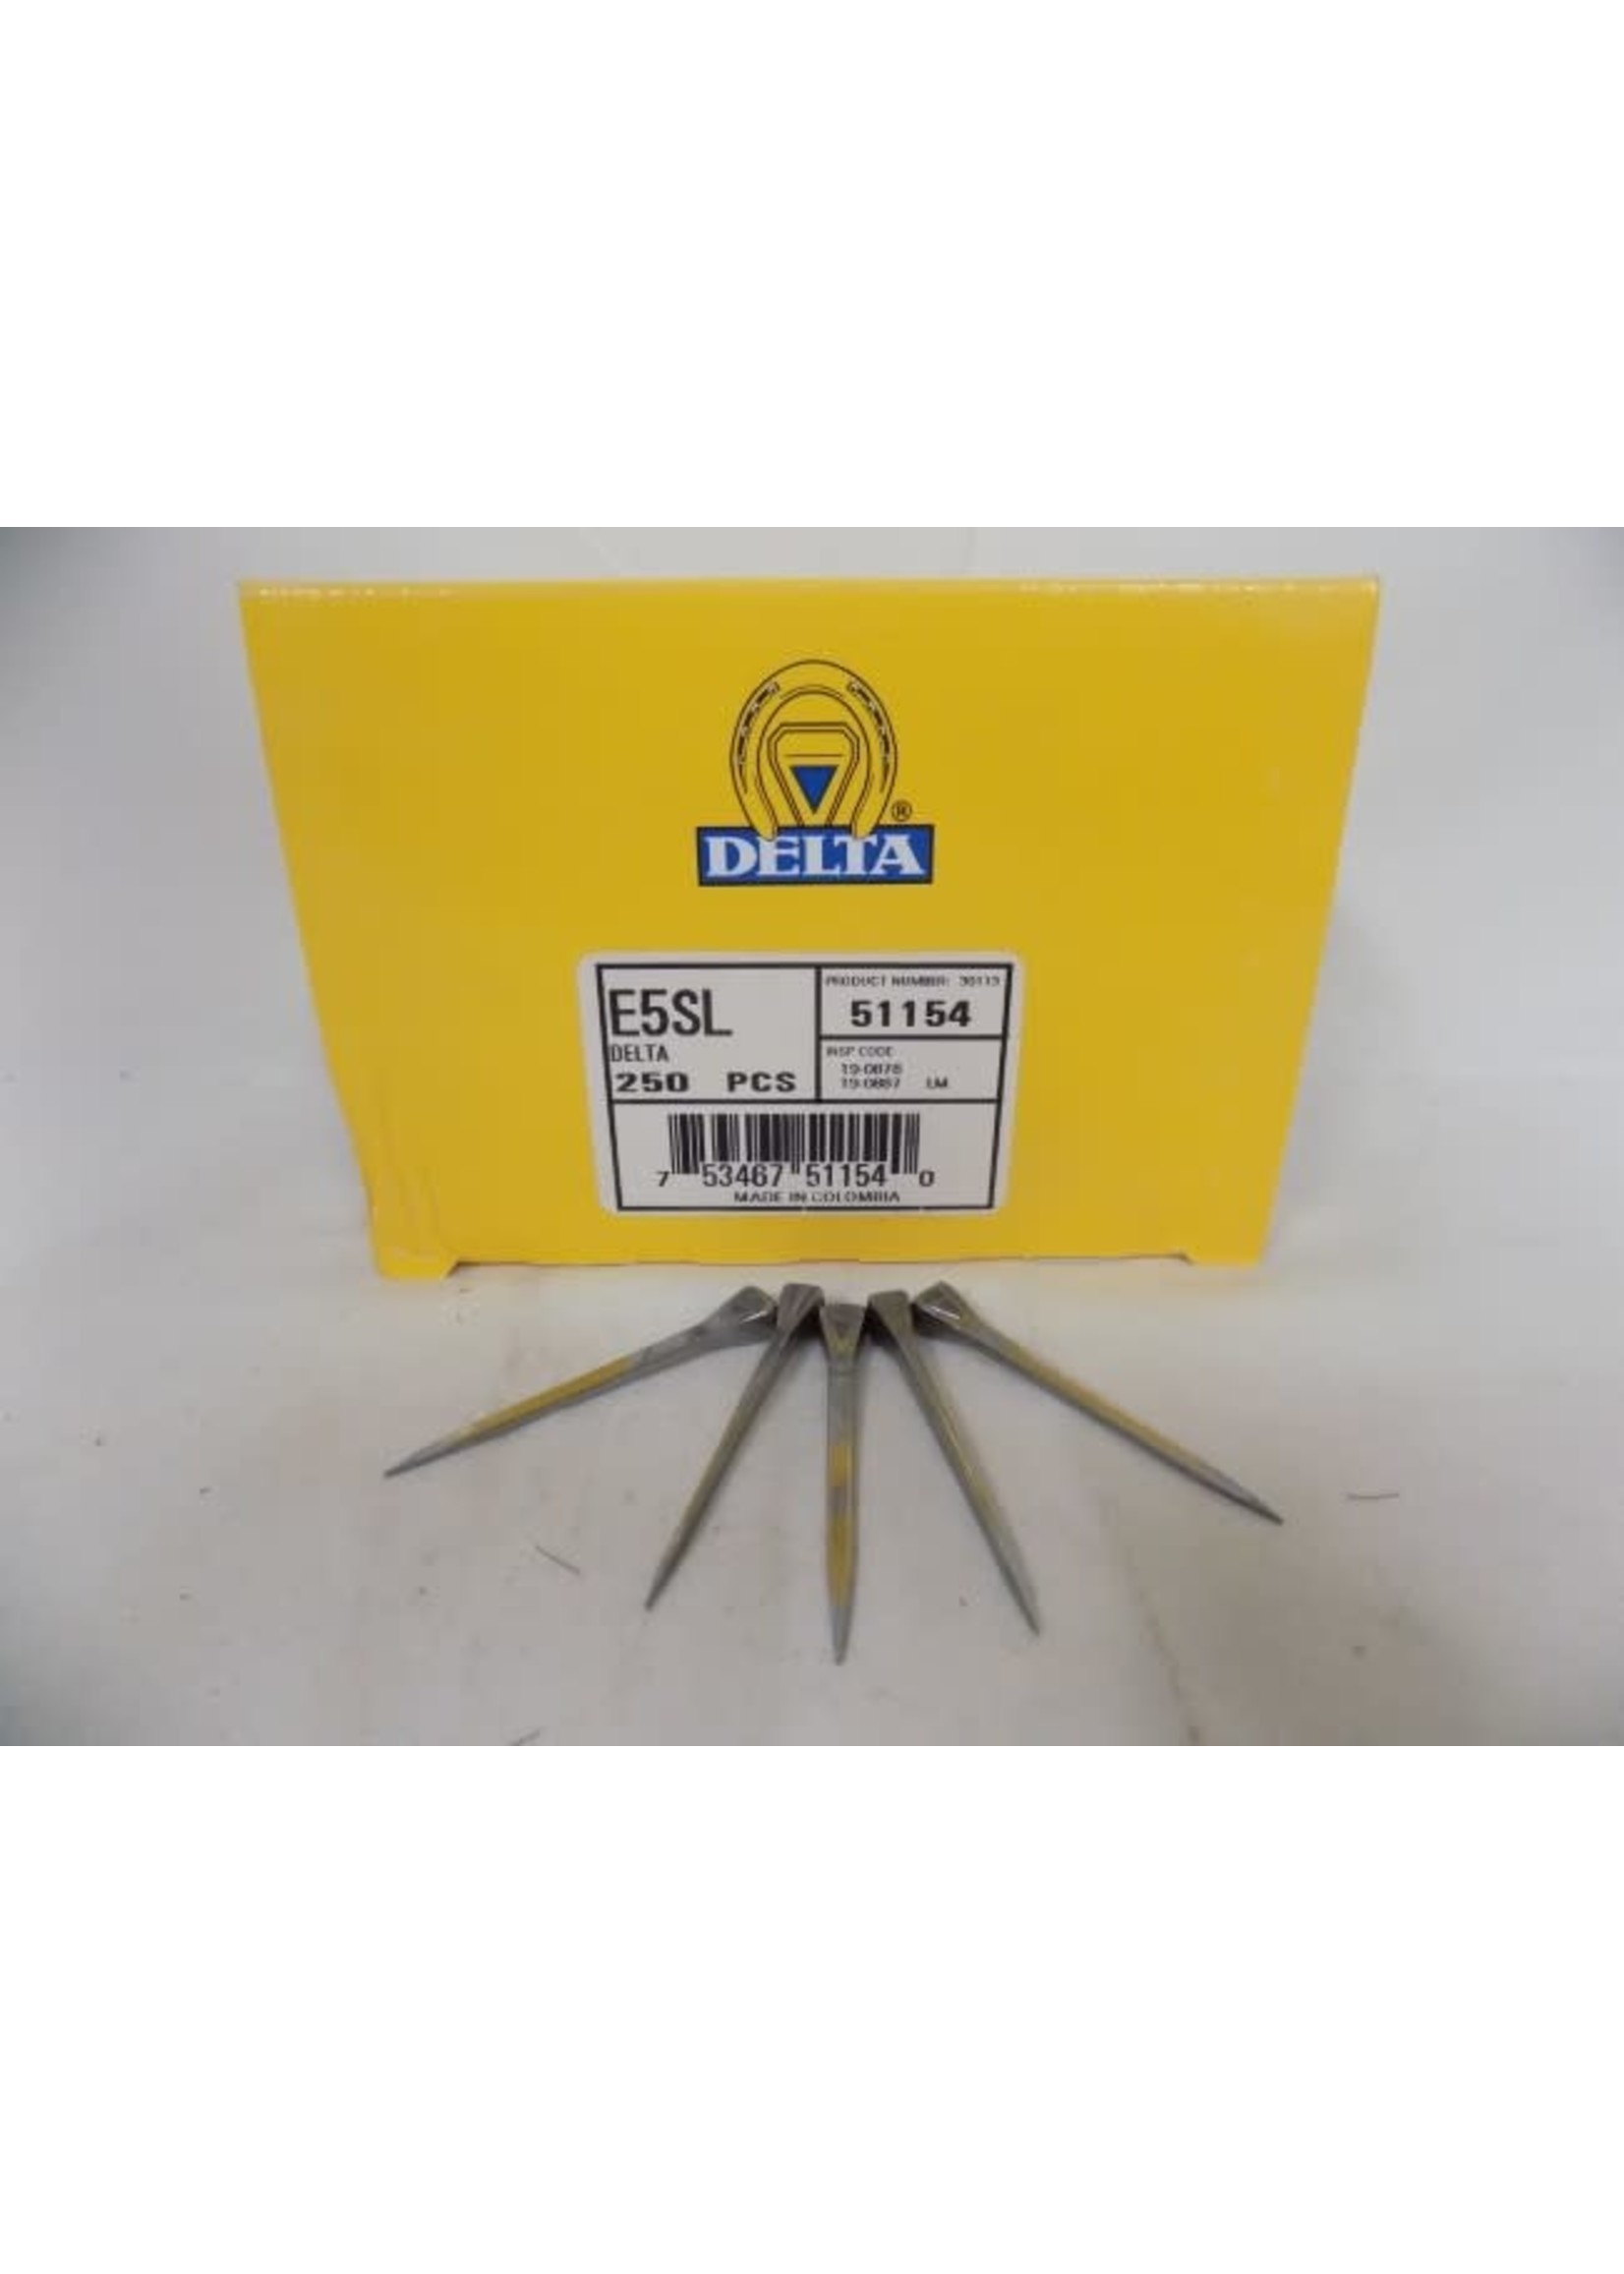 Delta Delta E5 Slim Nails, 250 box